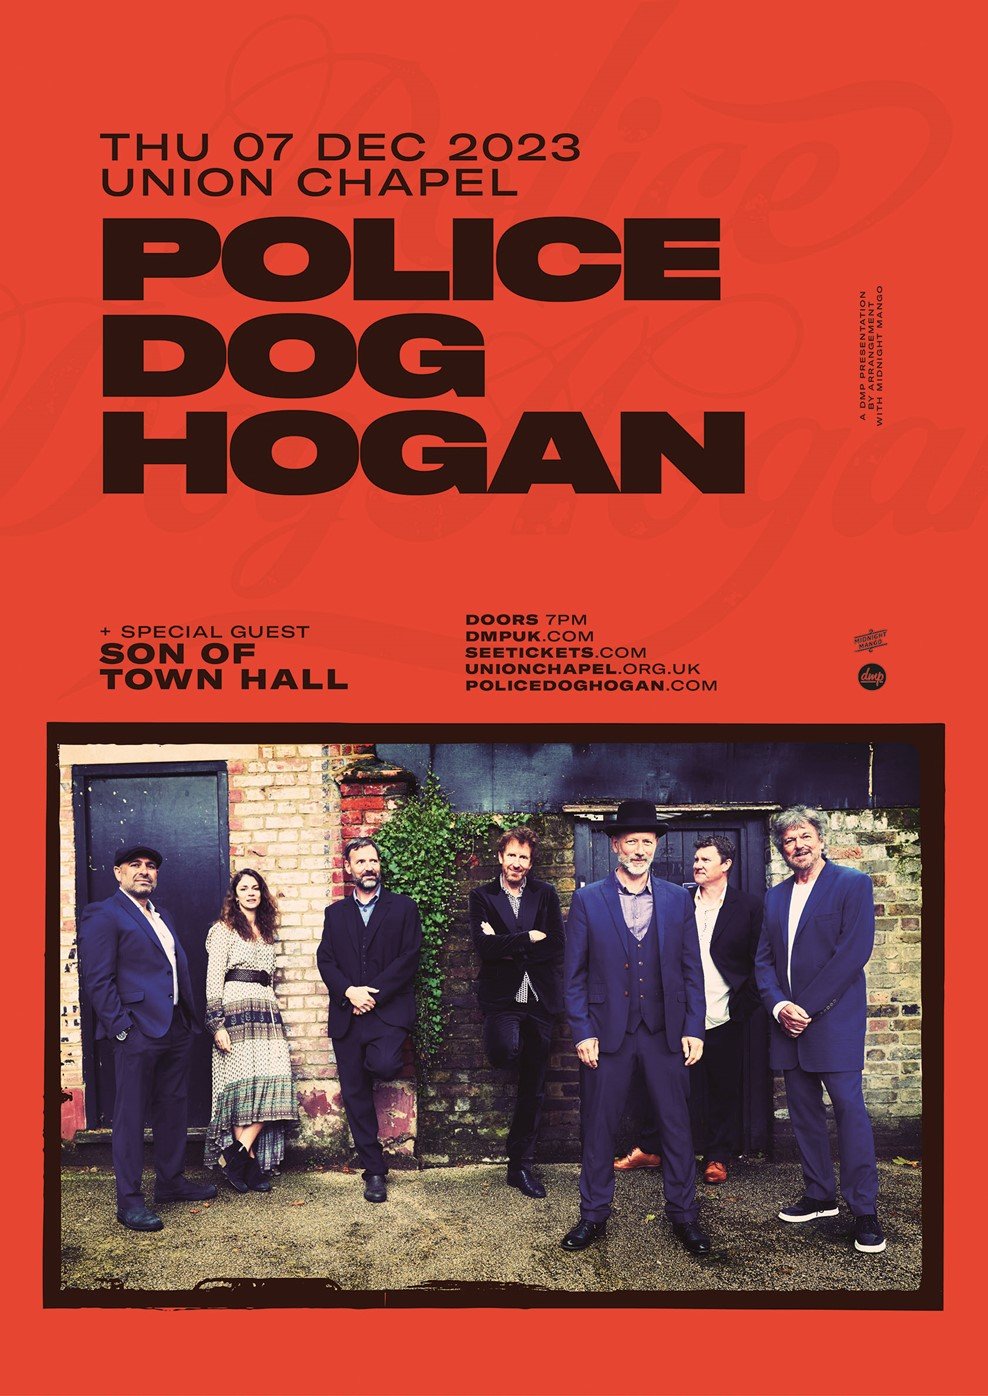 police dog hogan tour dates